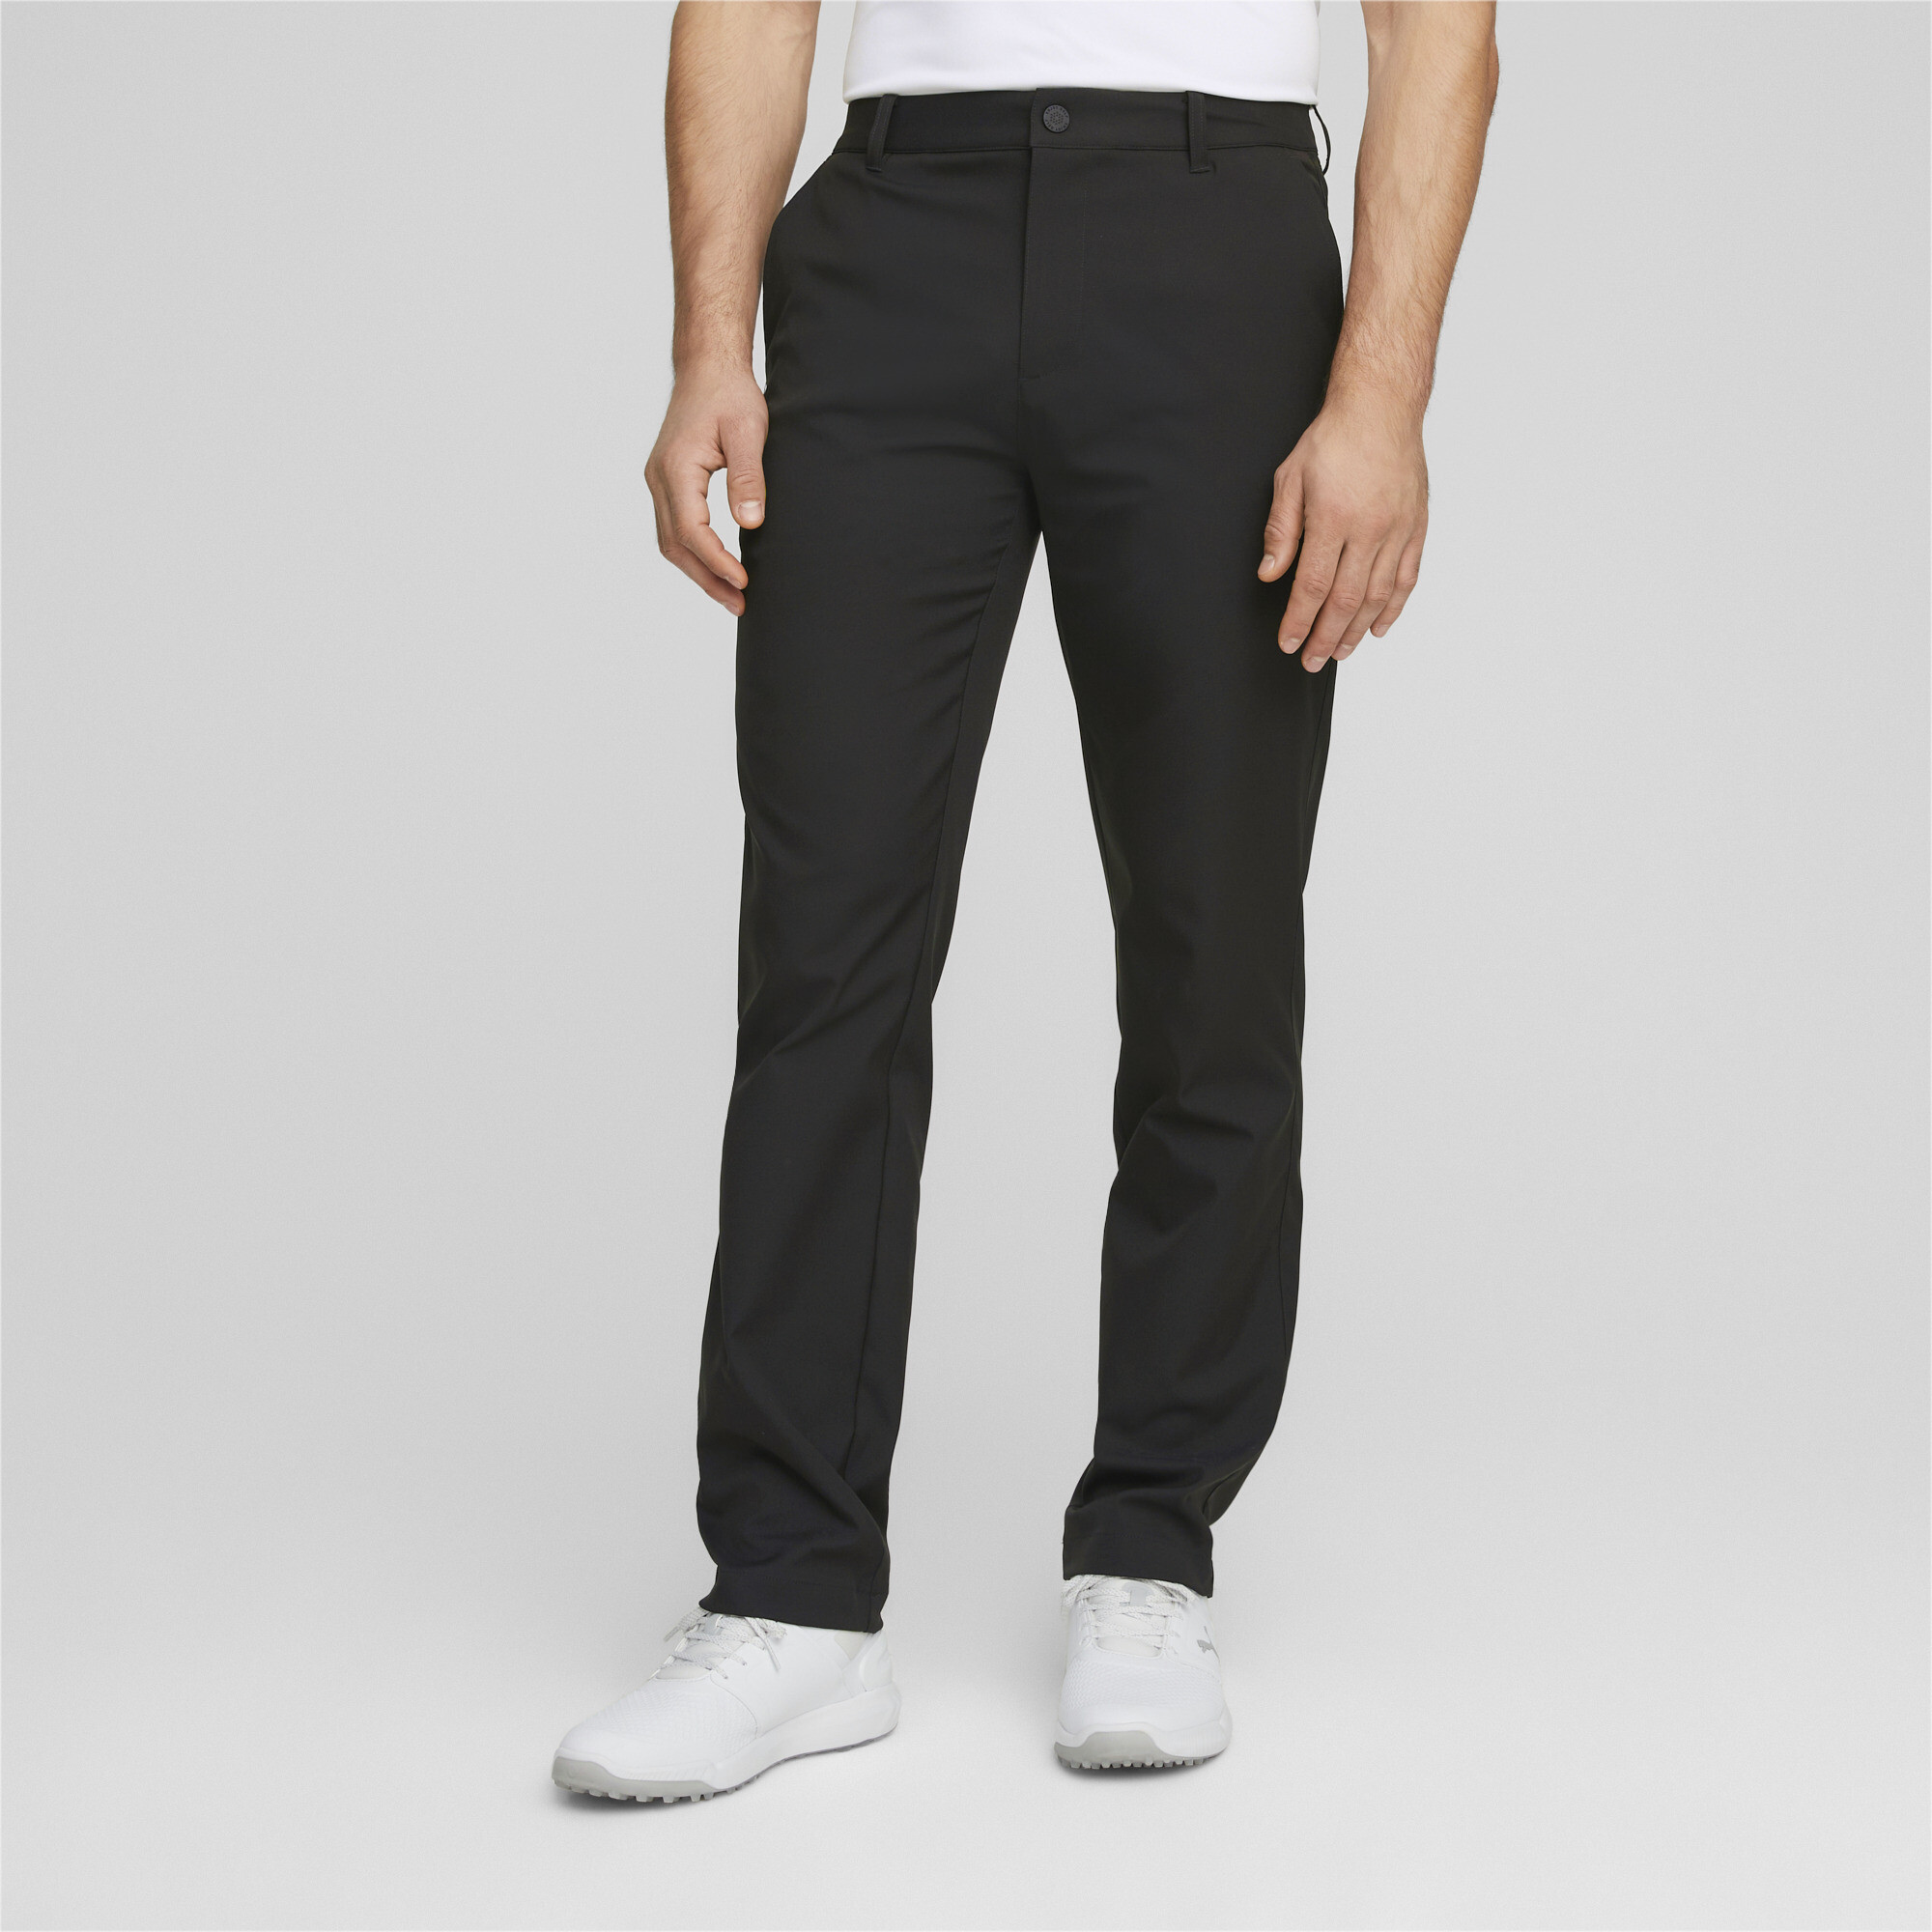 Men's Puma Dealer Golf Pants, Black, Size 33/30, Clothing